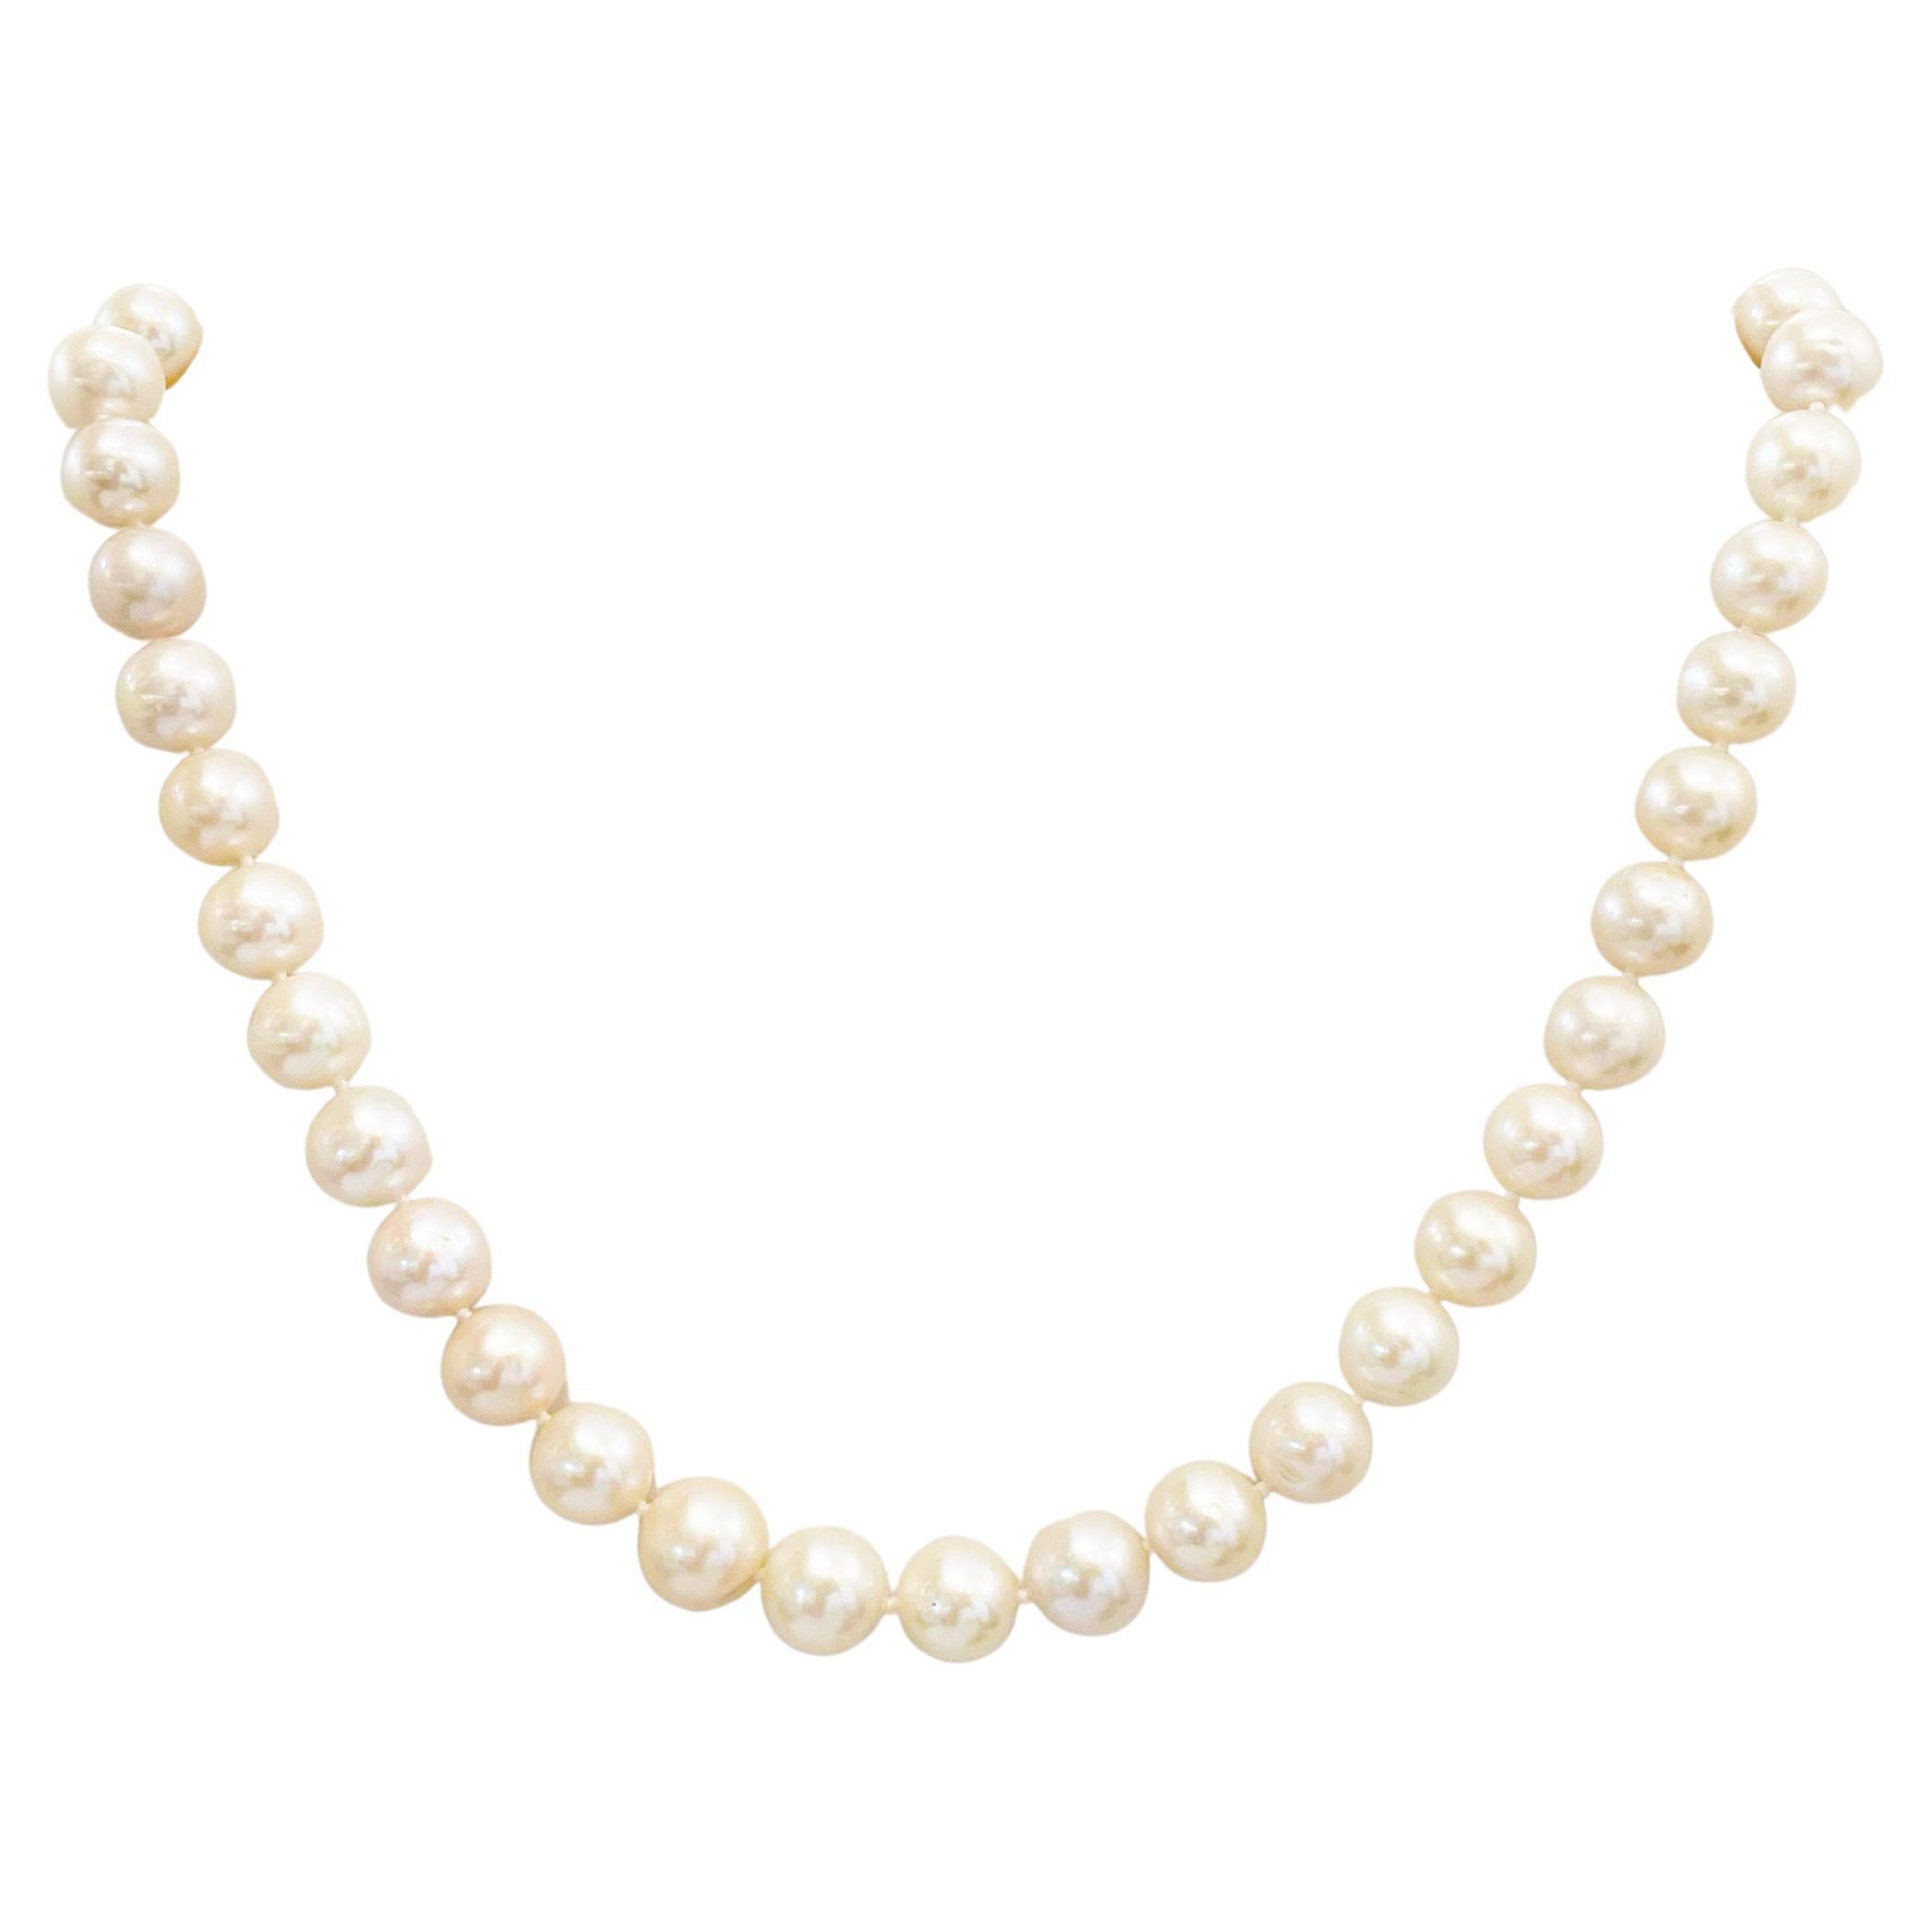 Collier de perles d'eau douce, or jaune, rang de perles